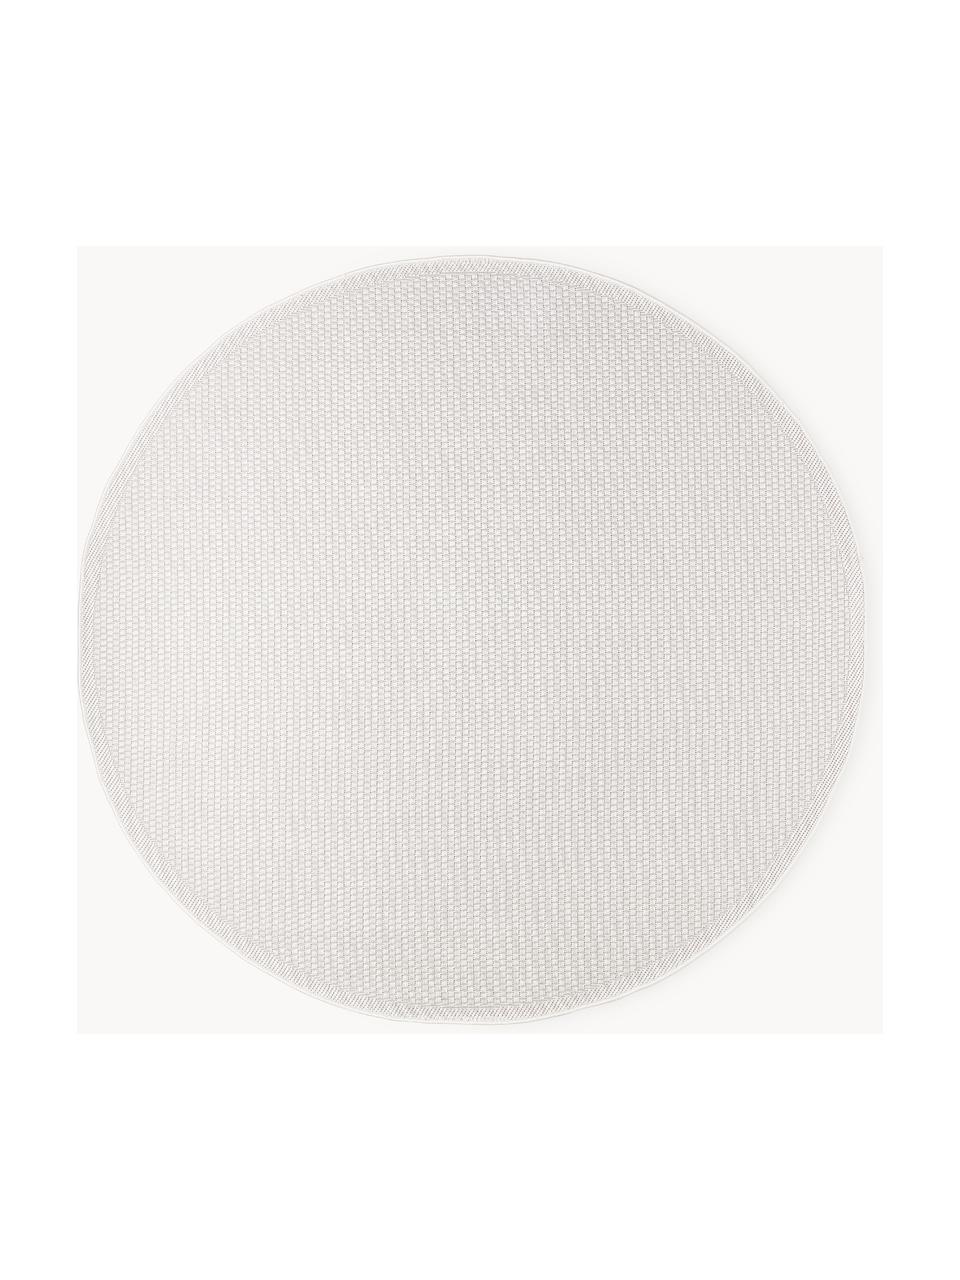 Tappeto rotondo da interno-esterno Toronto, 100% polipropilene, Bianco crema, Ø 120 cm (taglia S)